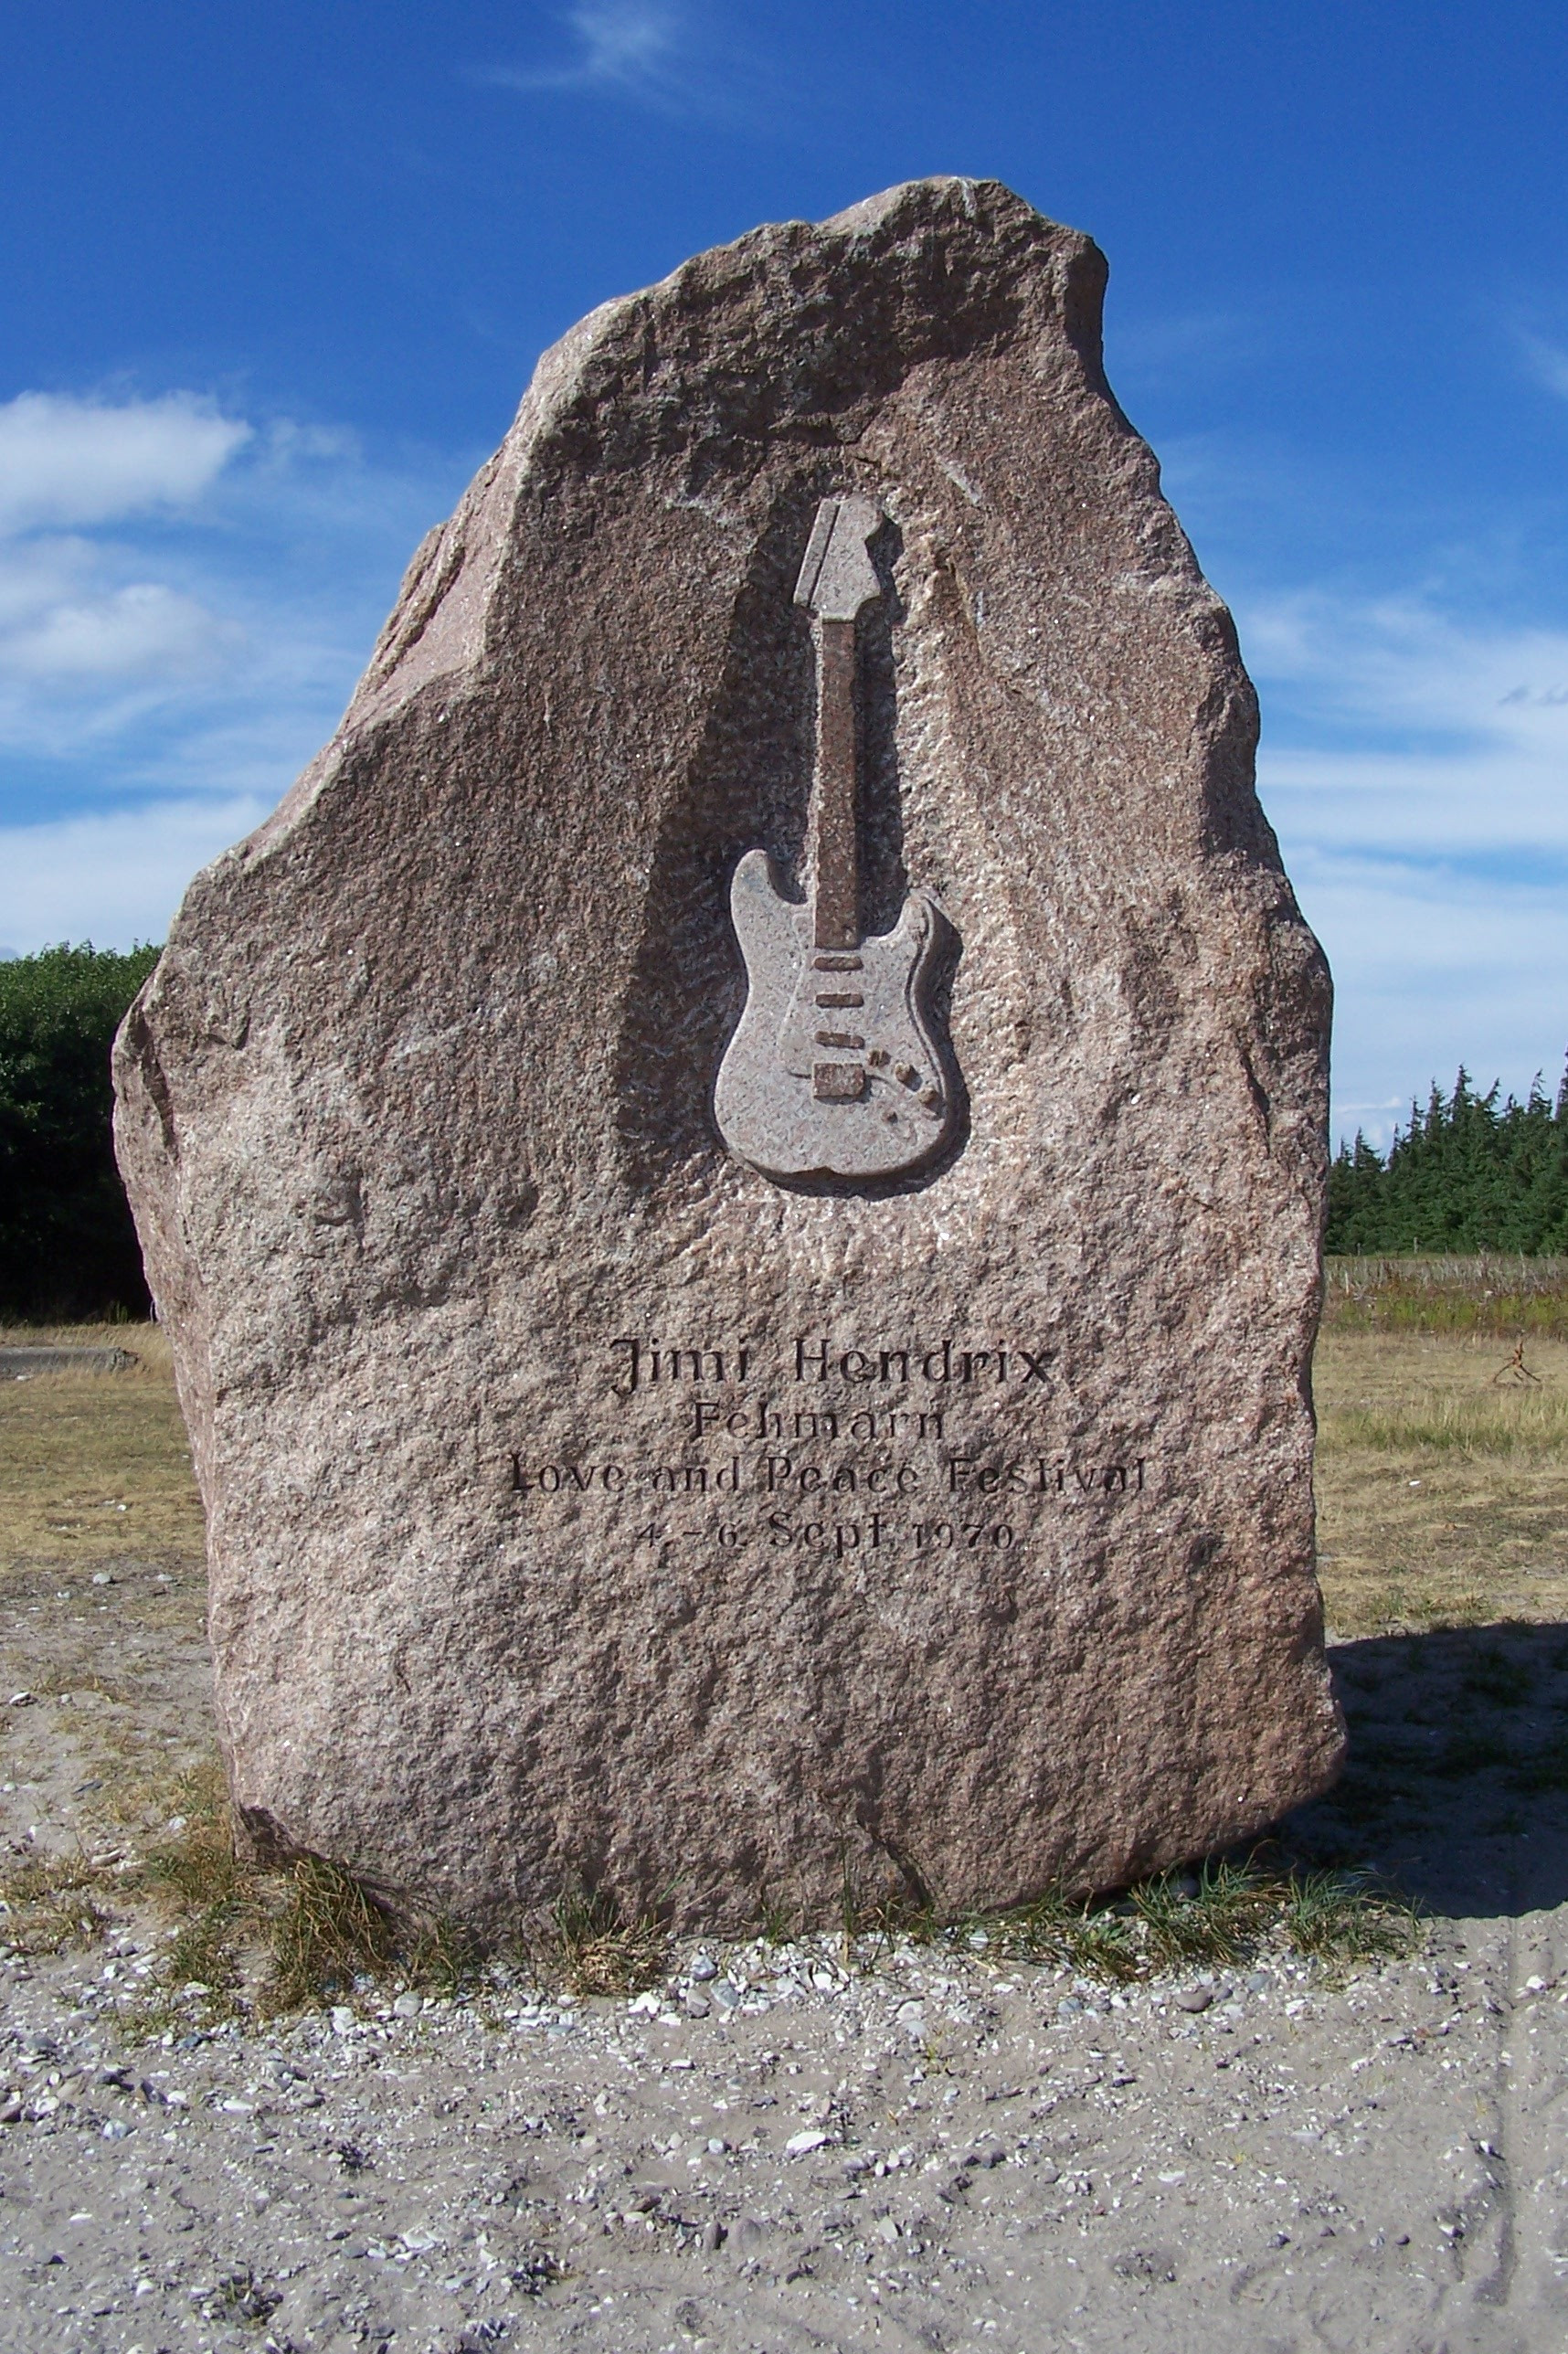 Jimi Hendrix Memorial Stone, Германия